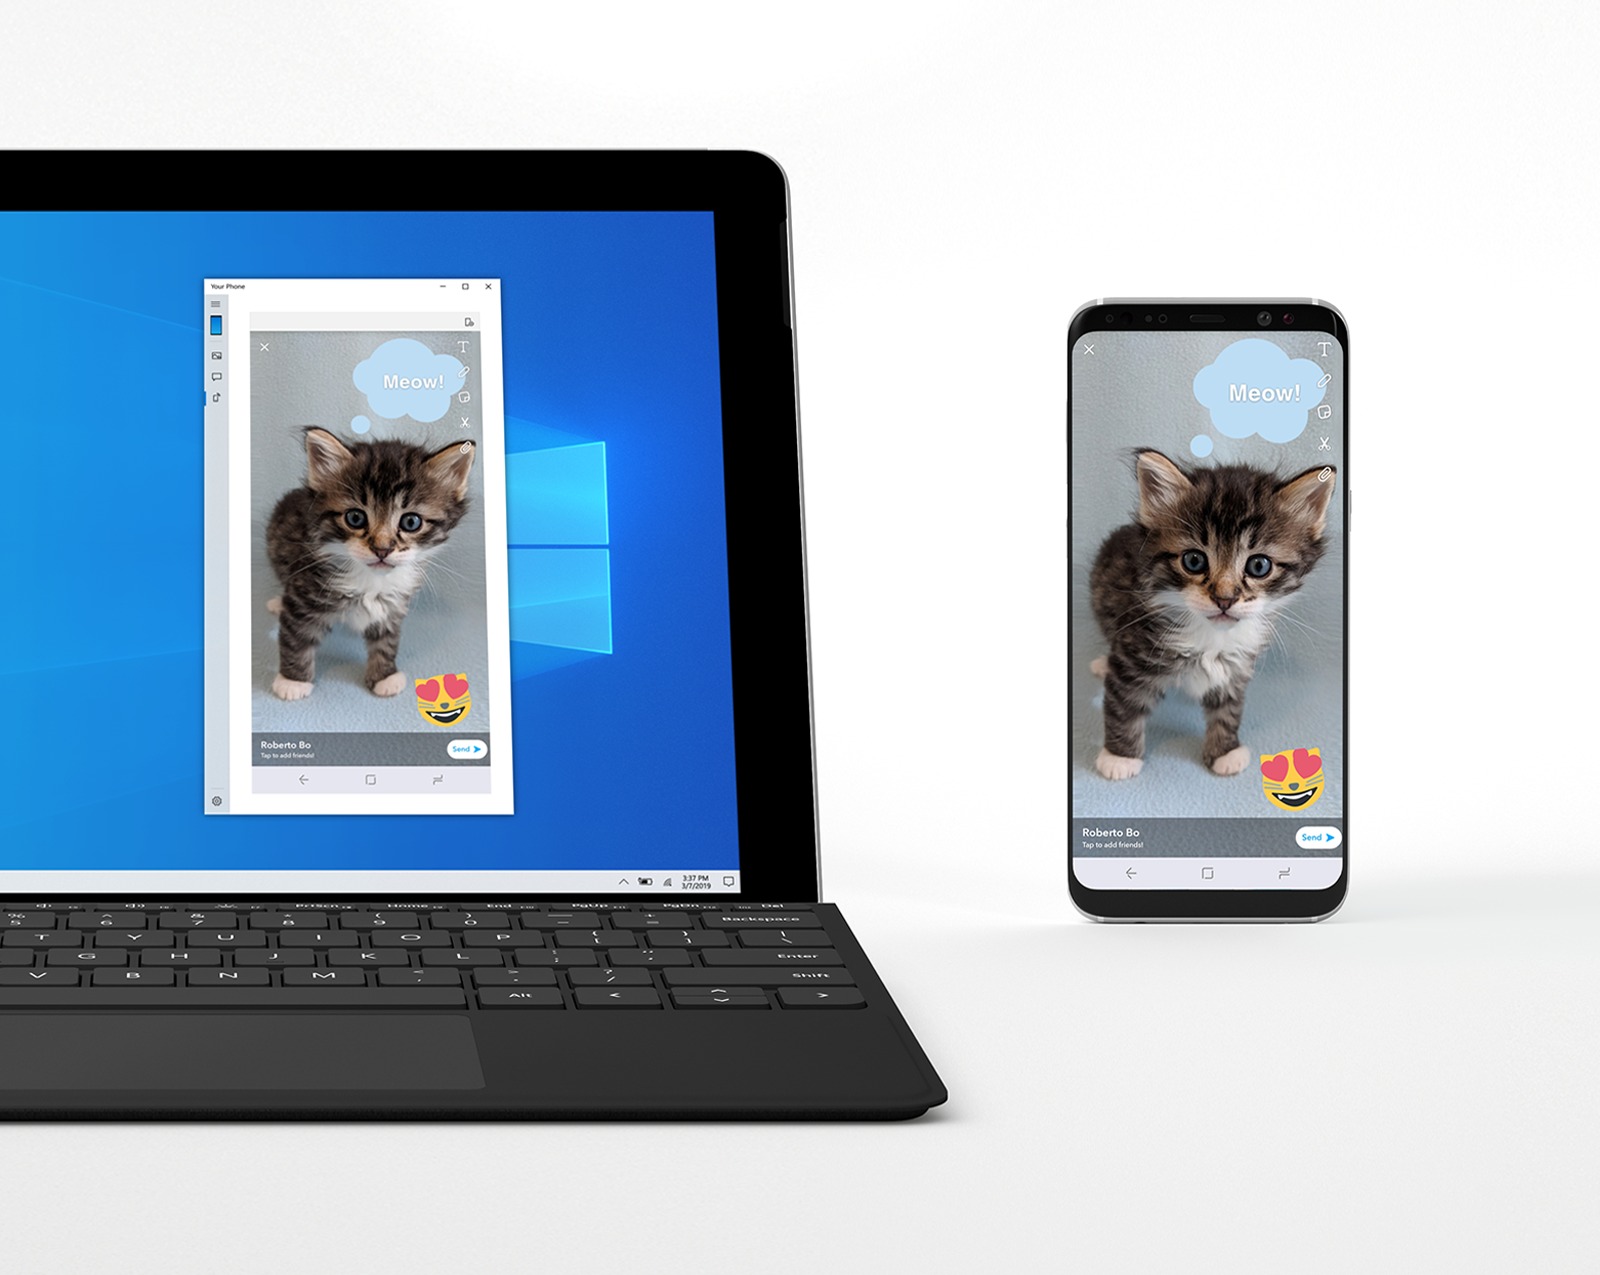 screen mirror android bluetooth app windows 10